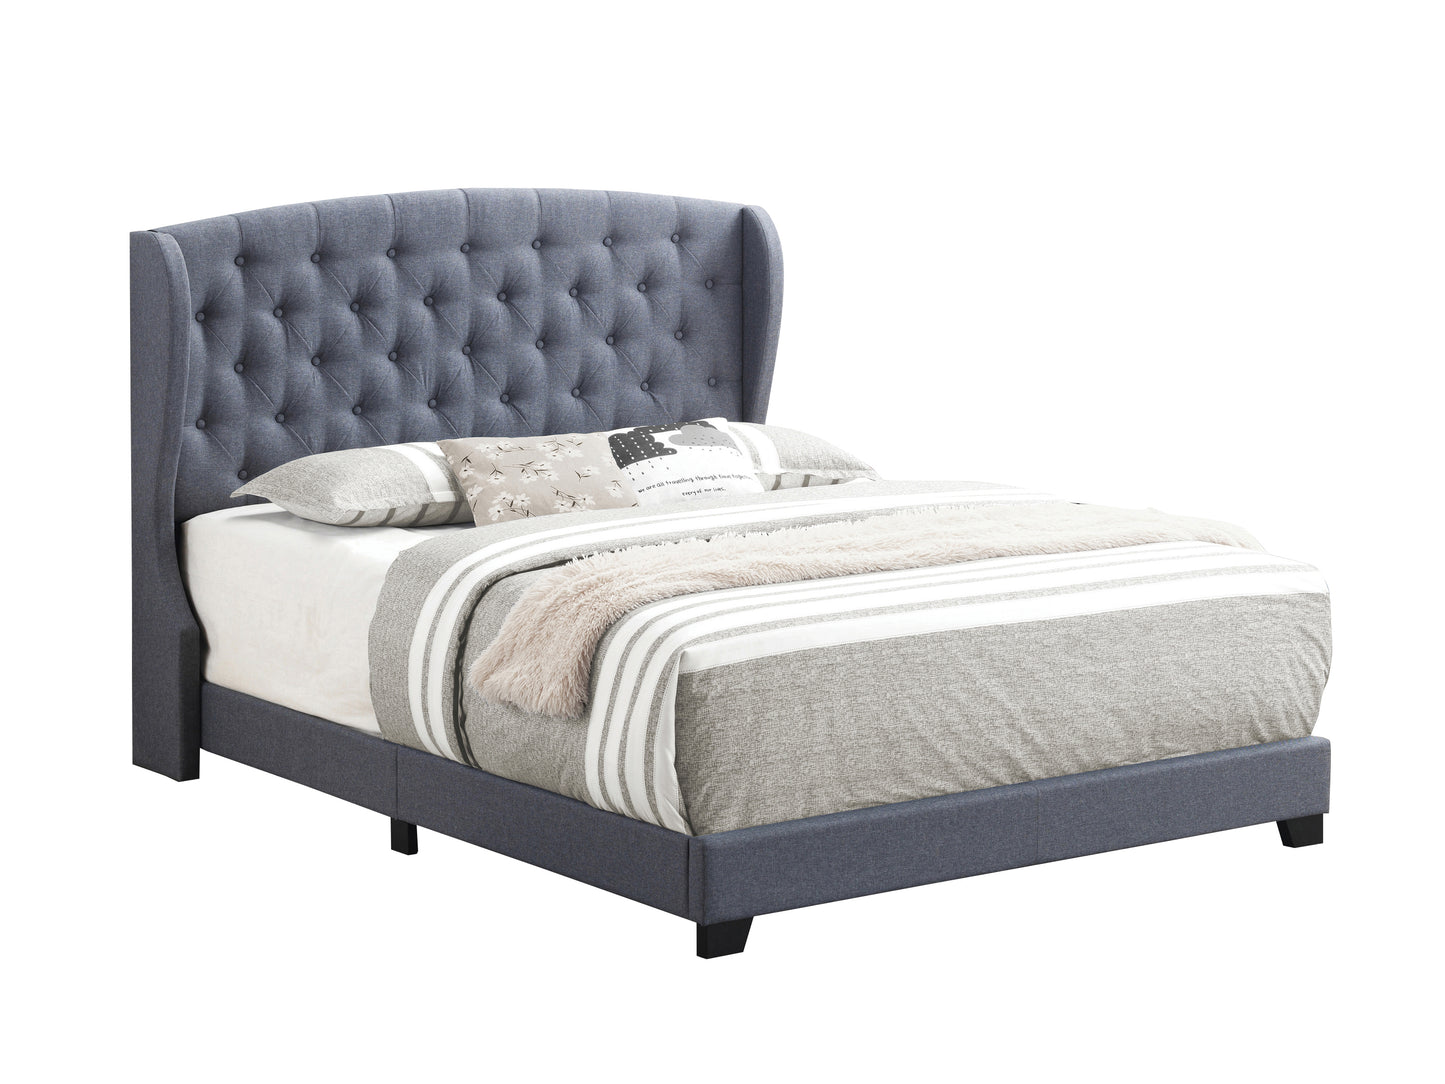 Krome Full Upholstered Bed with Demi-wing Headboard Gunmetal